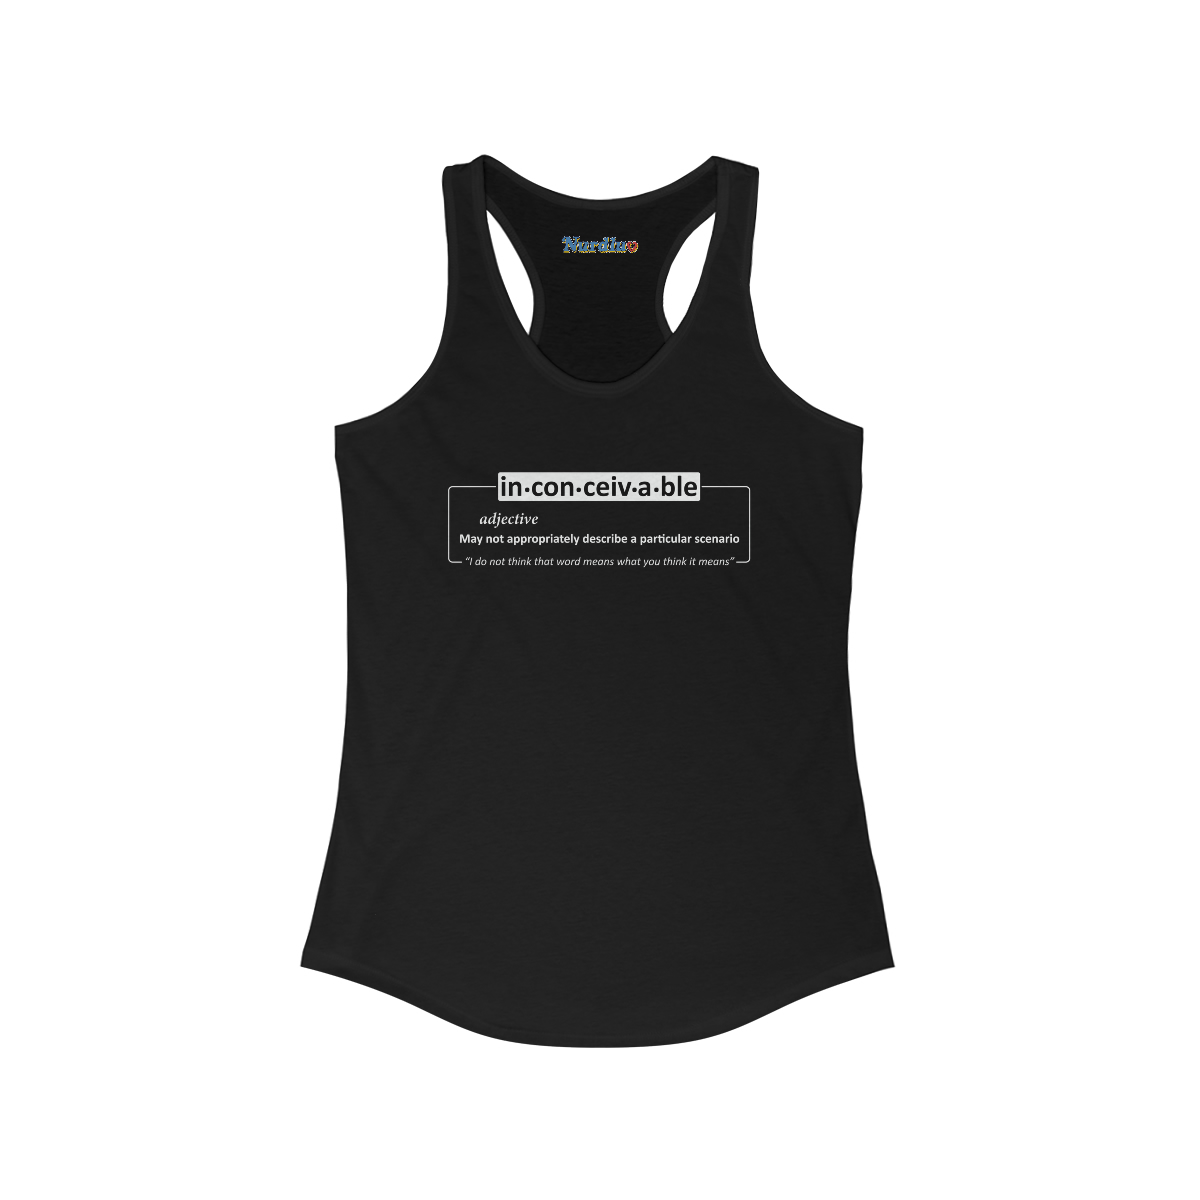 Inconceivable (dark shirts) - Women's Ideal Racerback Tank